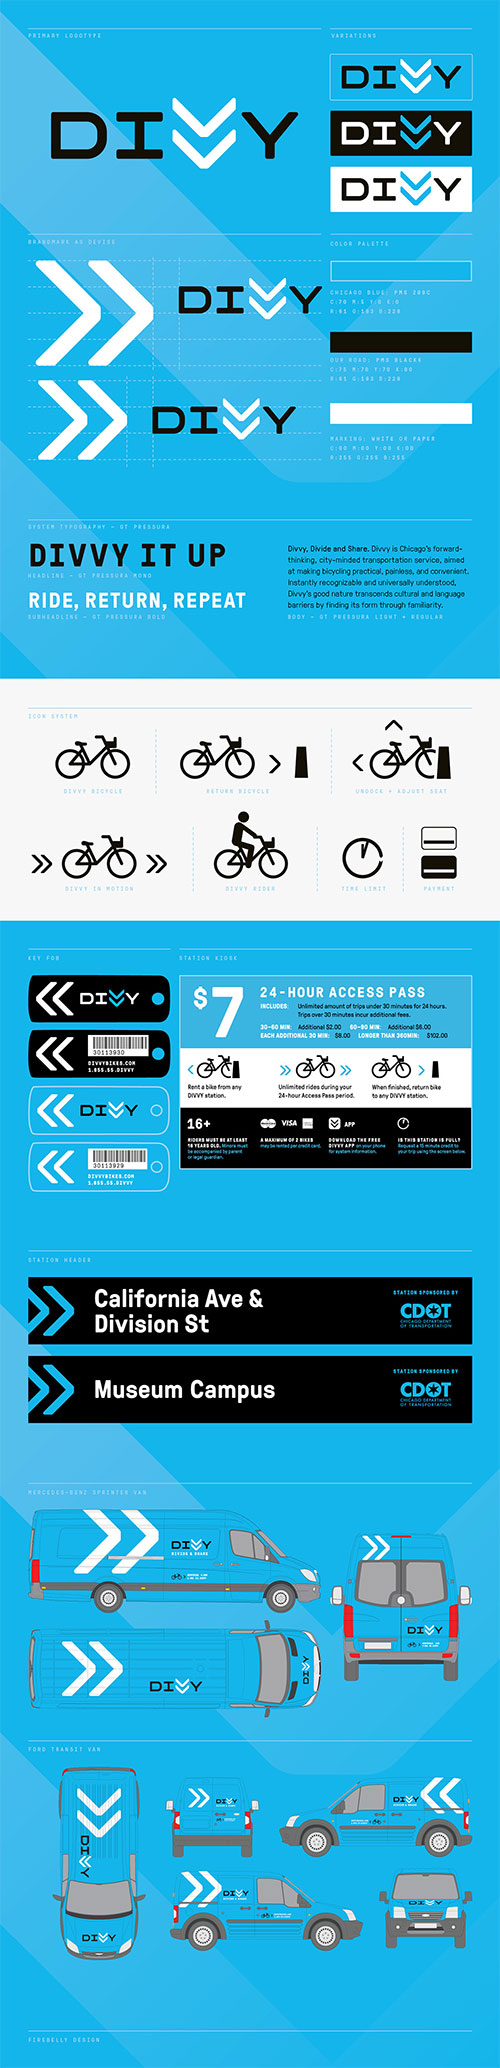 Divvy bike-share identity